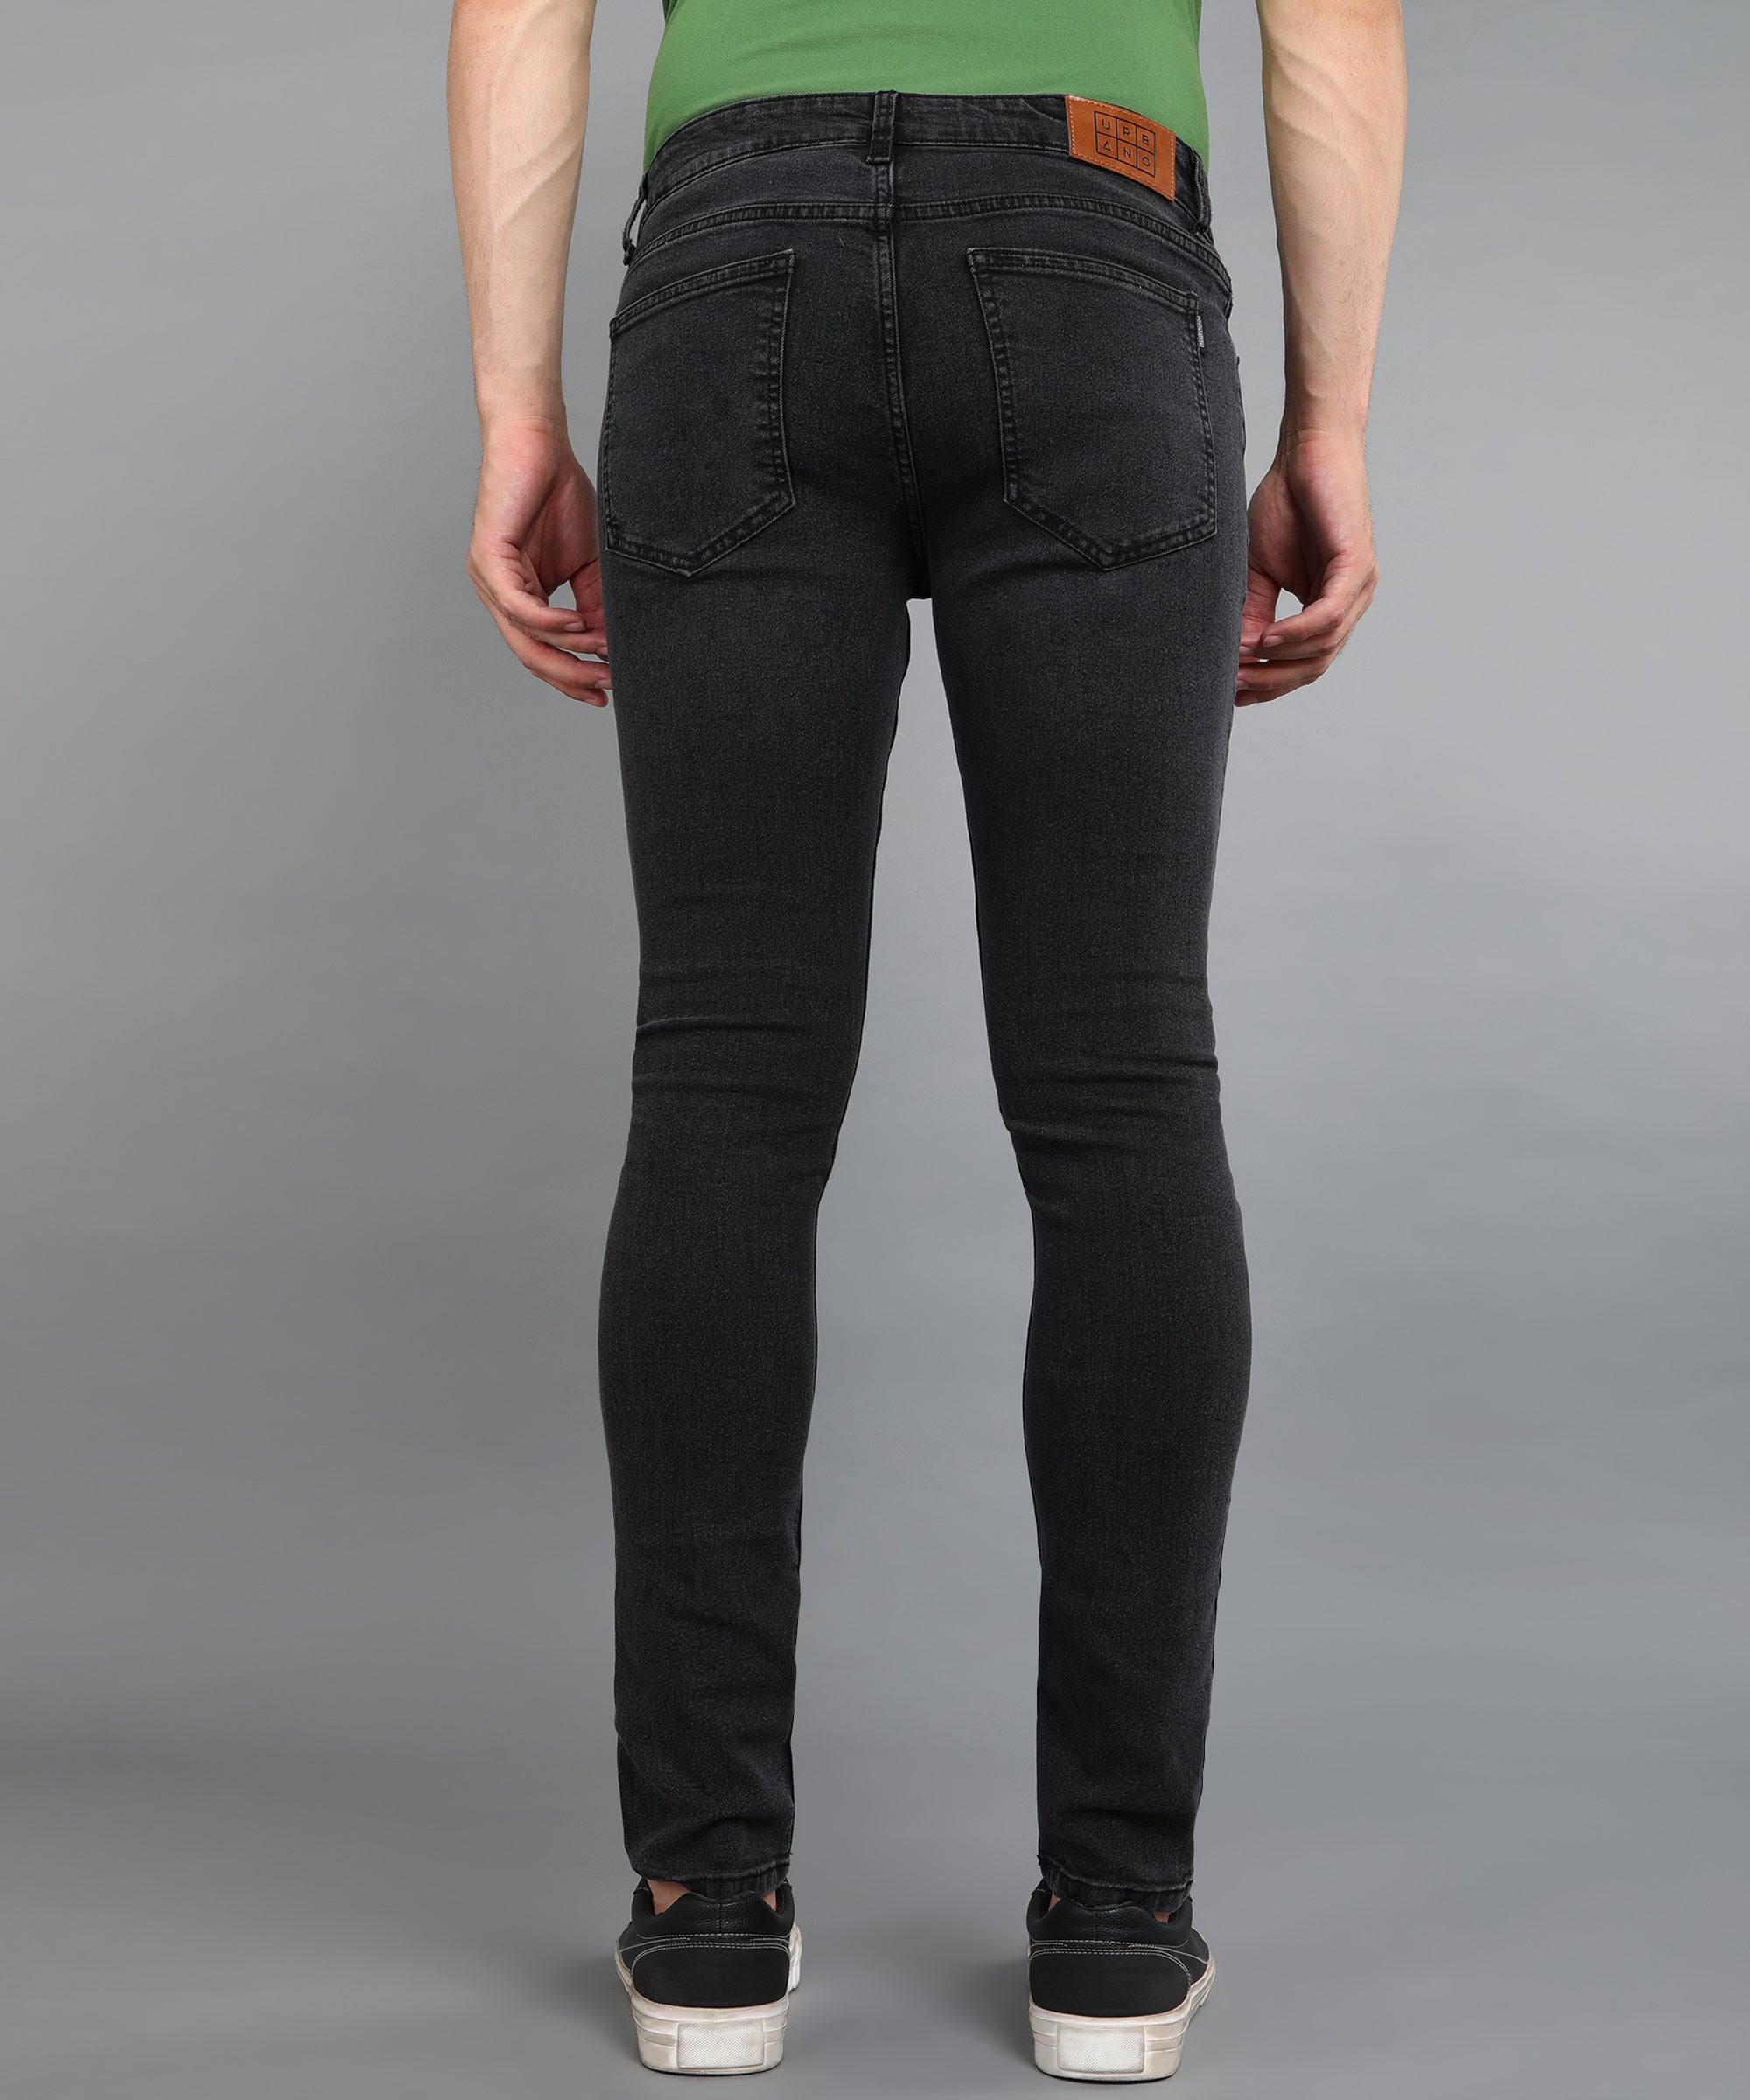 Urbano Fashion Men's Dark Grey Regular Fit Washed Jeans Stretchable